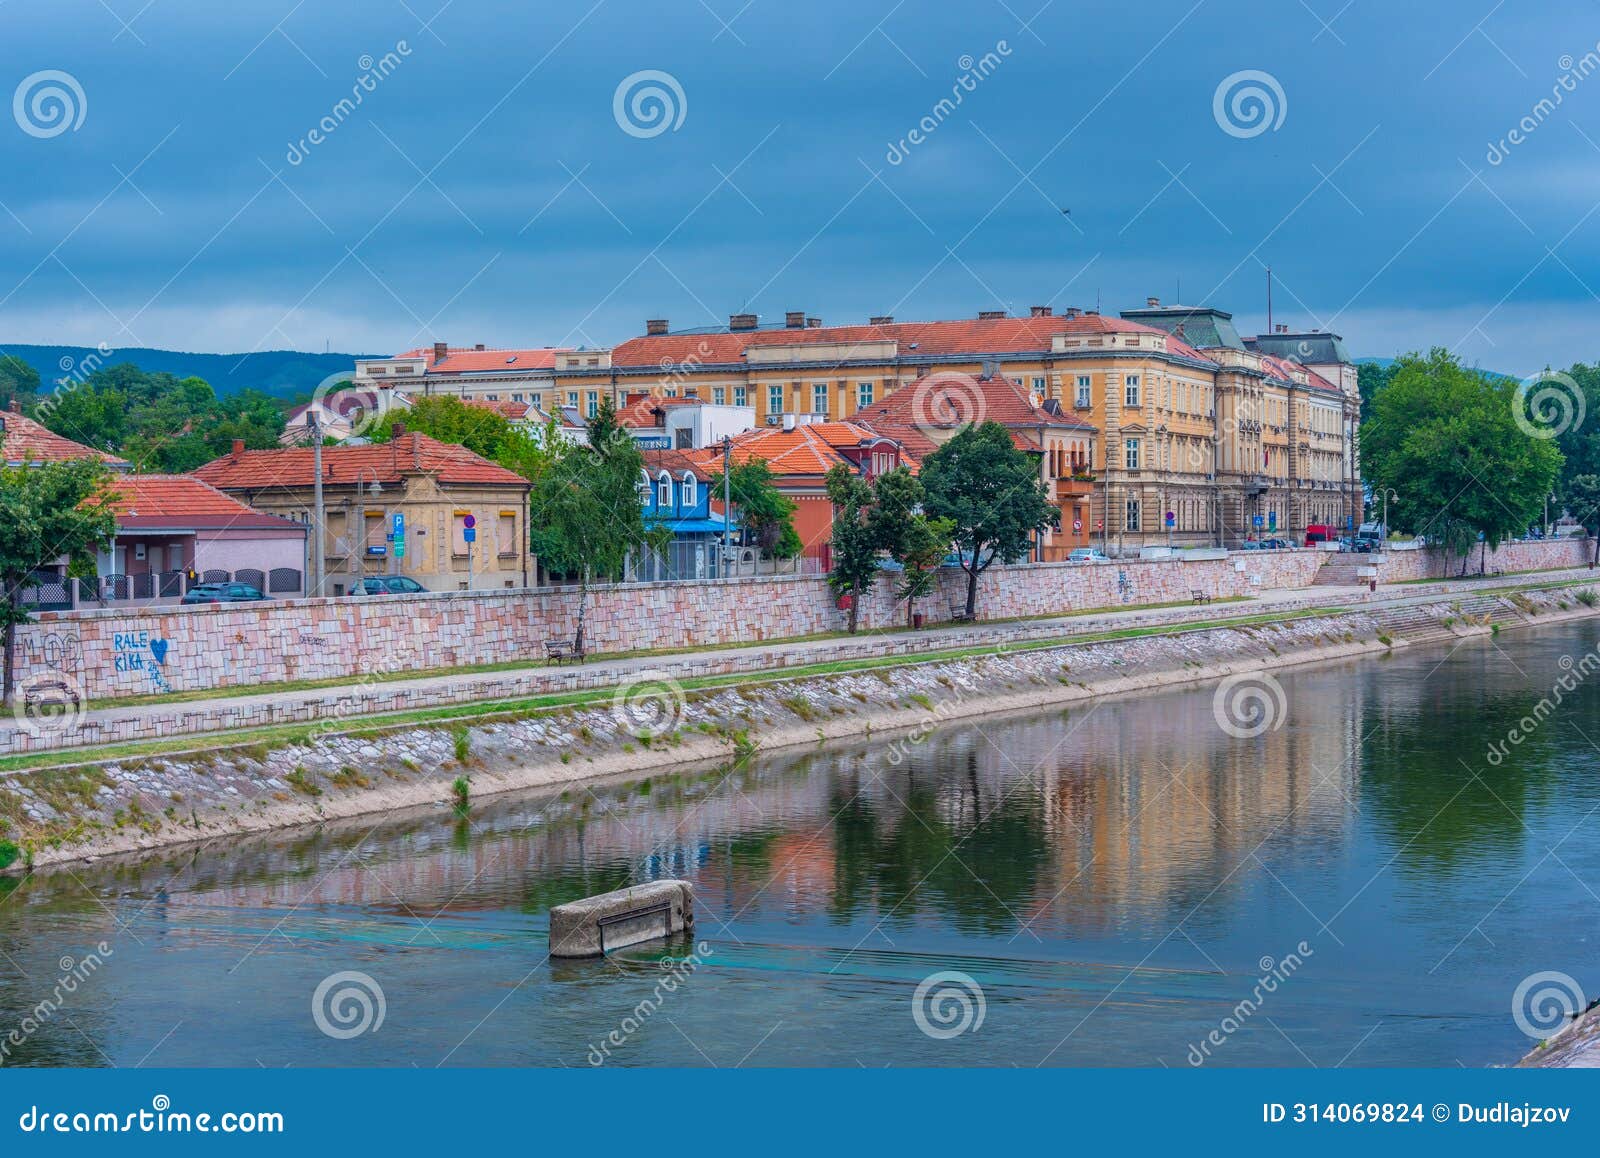 riverside of nisava in serbian town nis